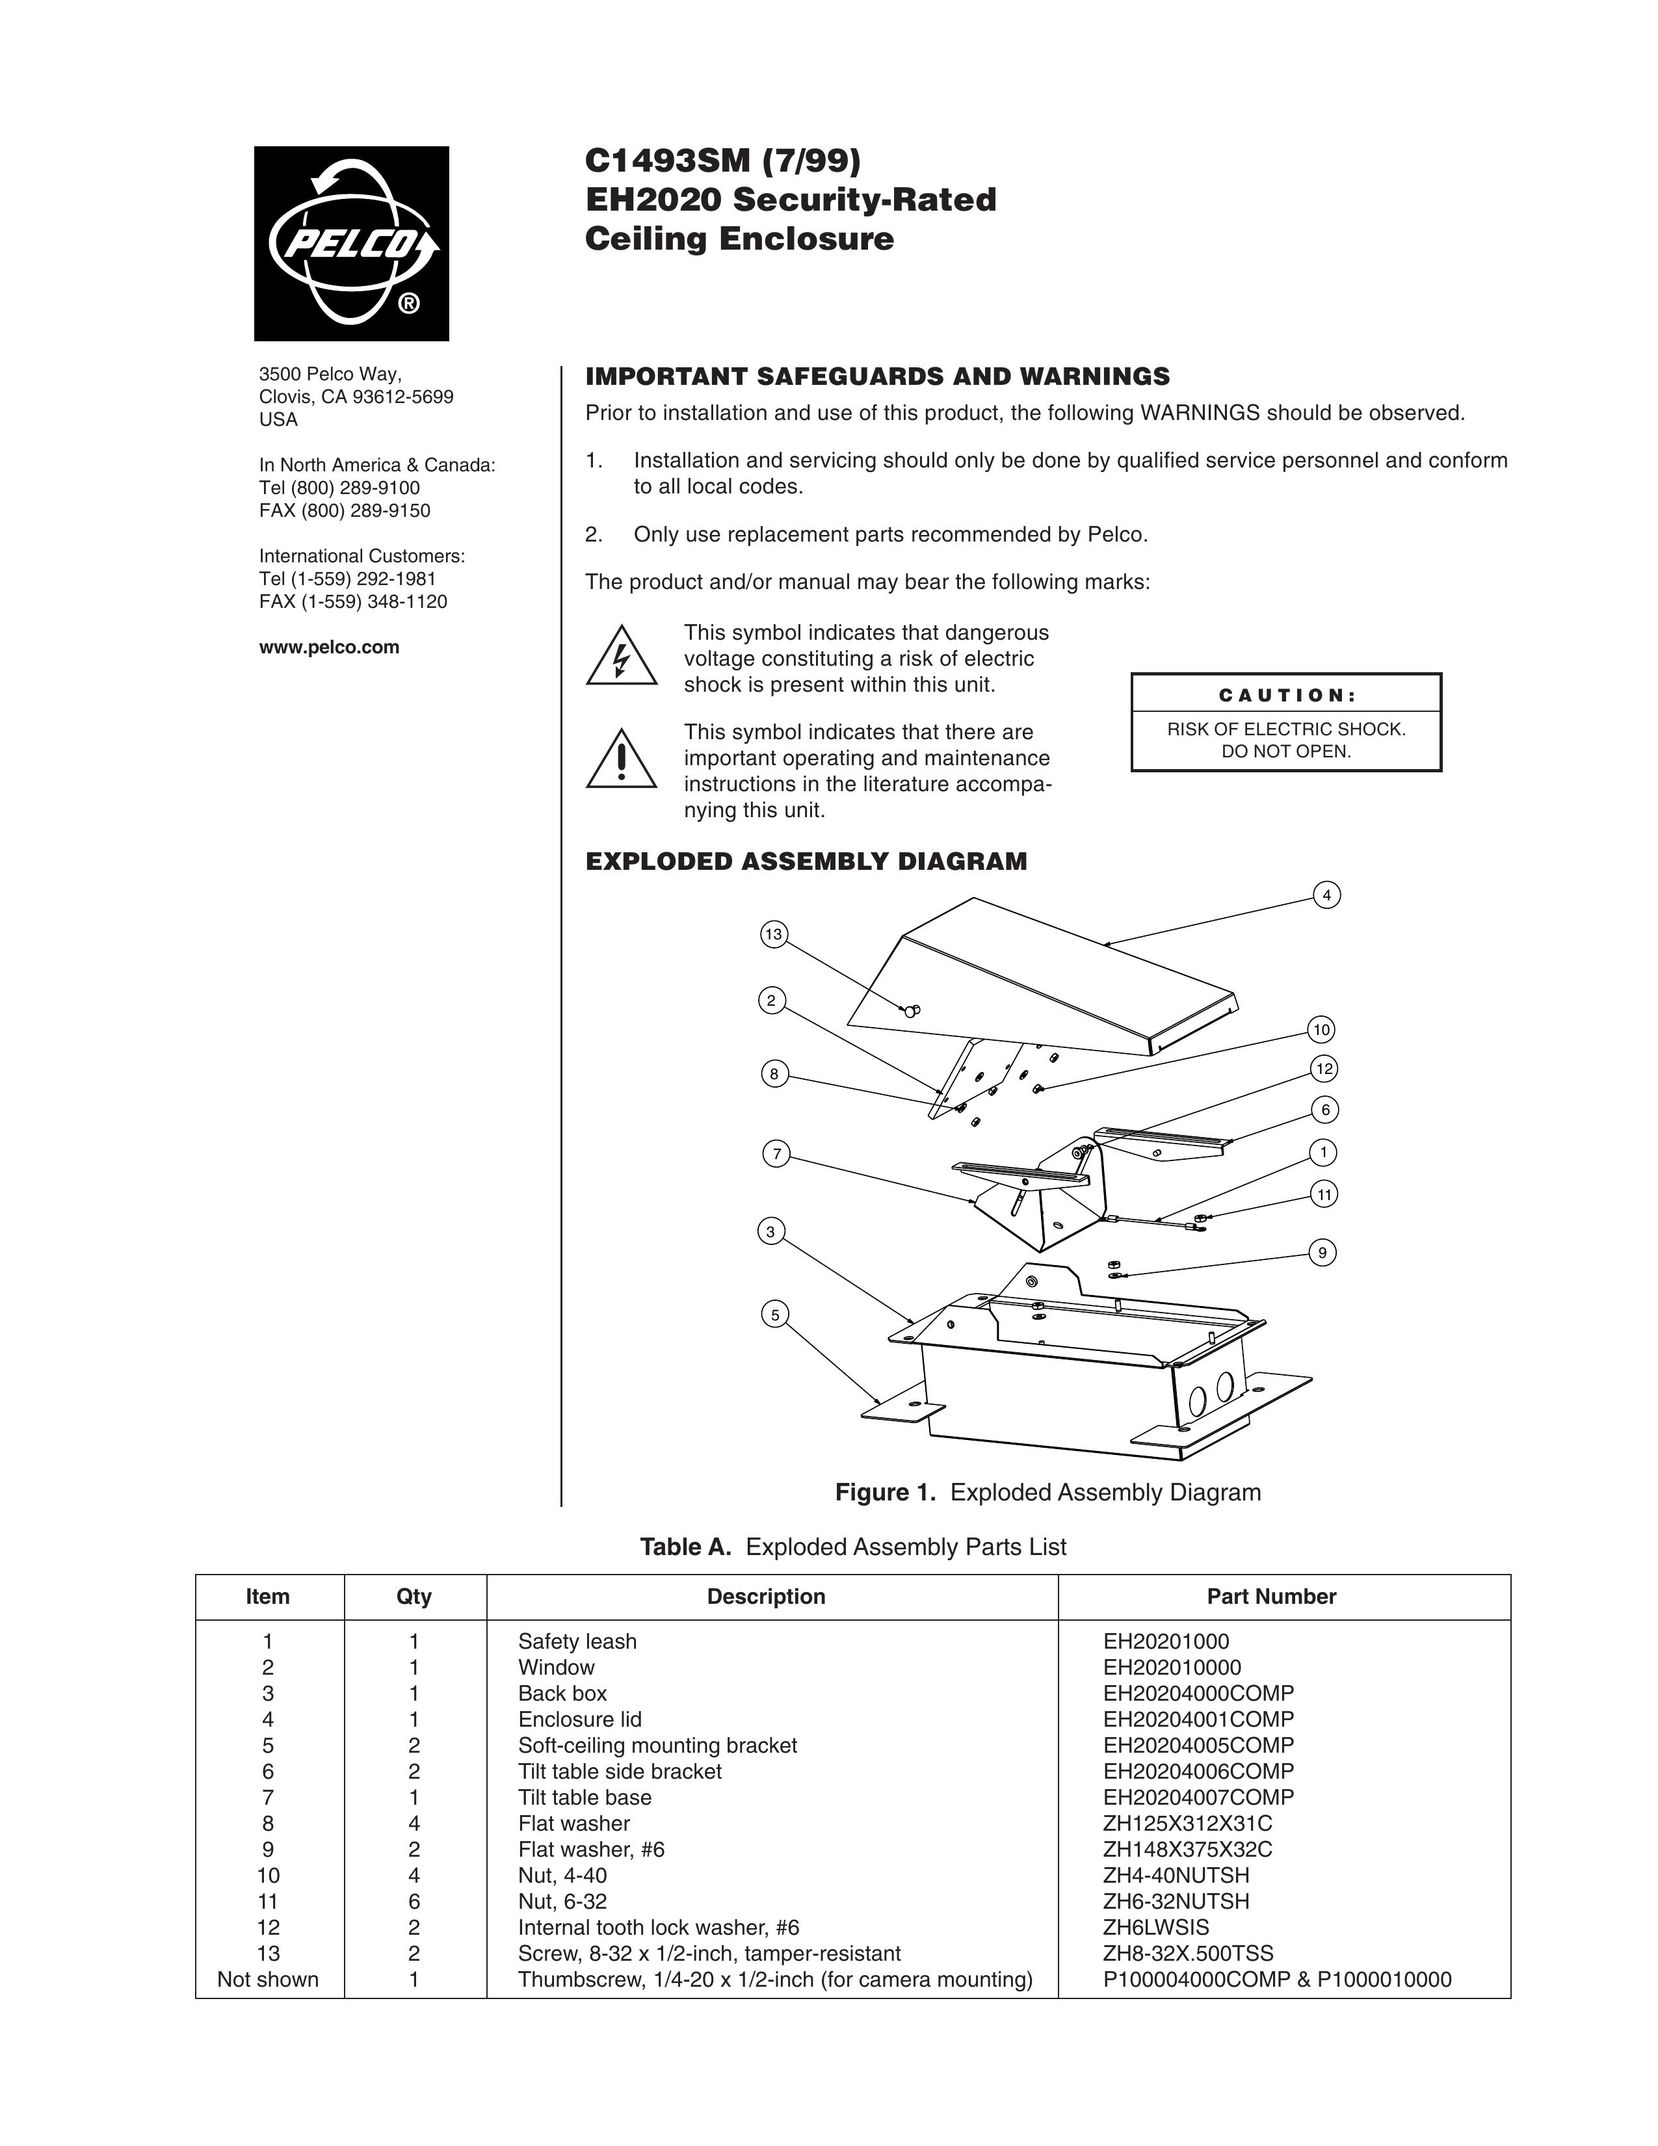 Pelco C1493SM Home Security System User Manual